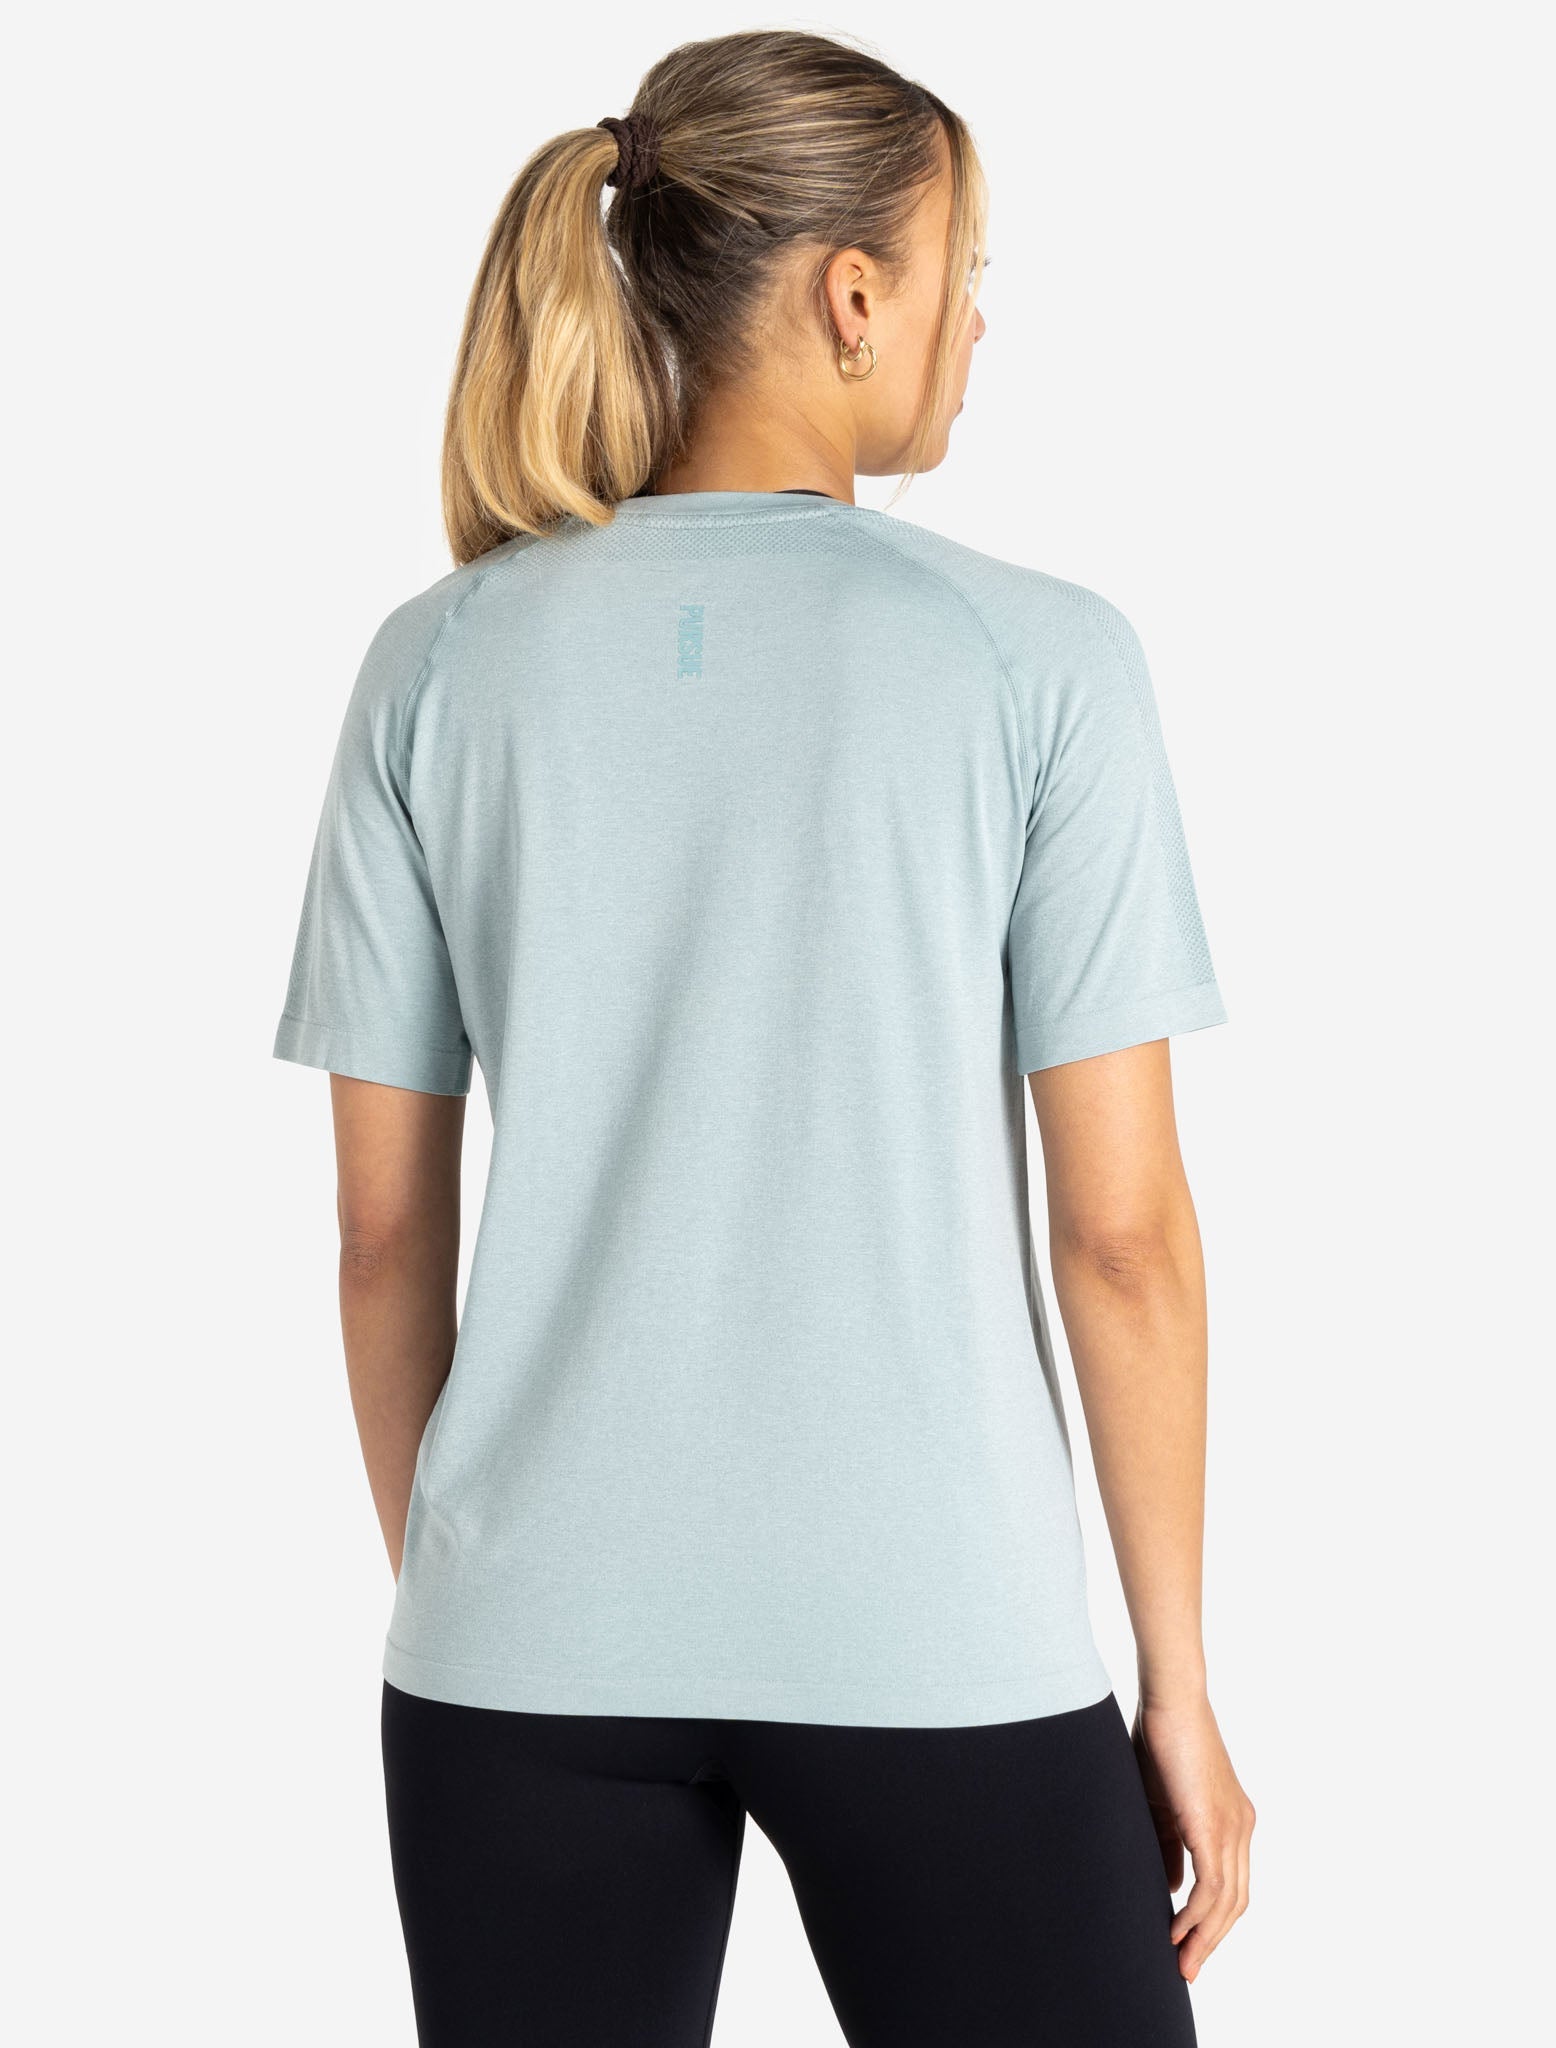 Seamless T-Shirt / Seafoam Green Marl Pursue Fitness 2